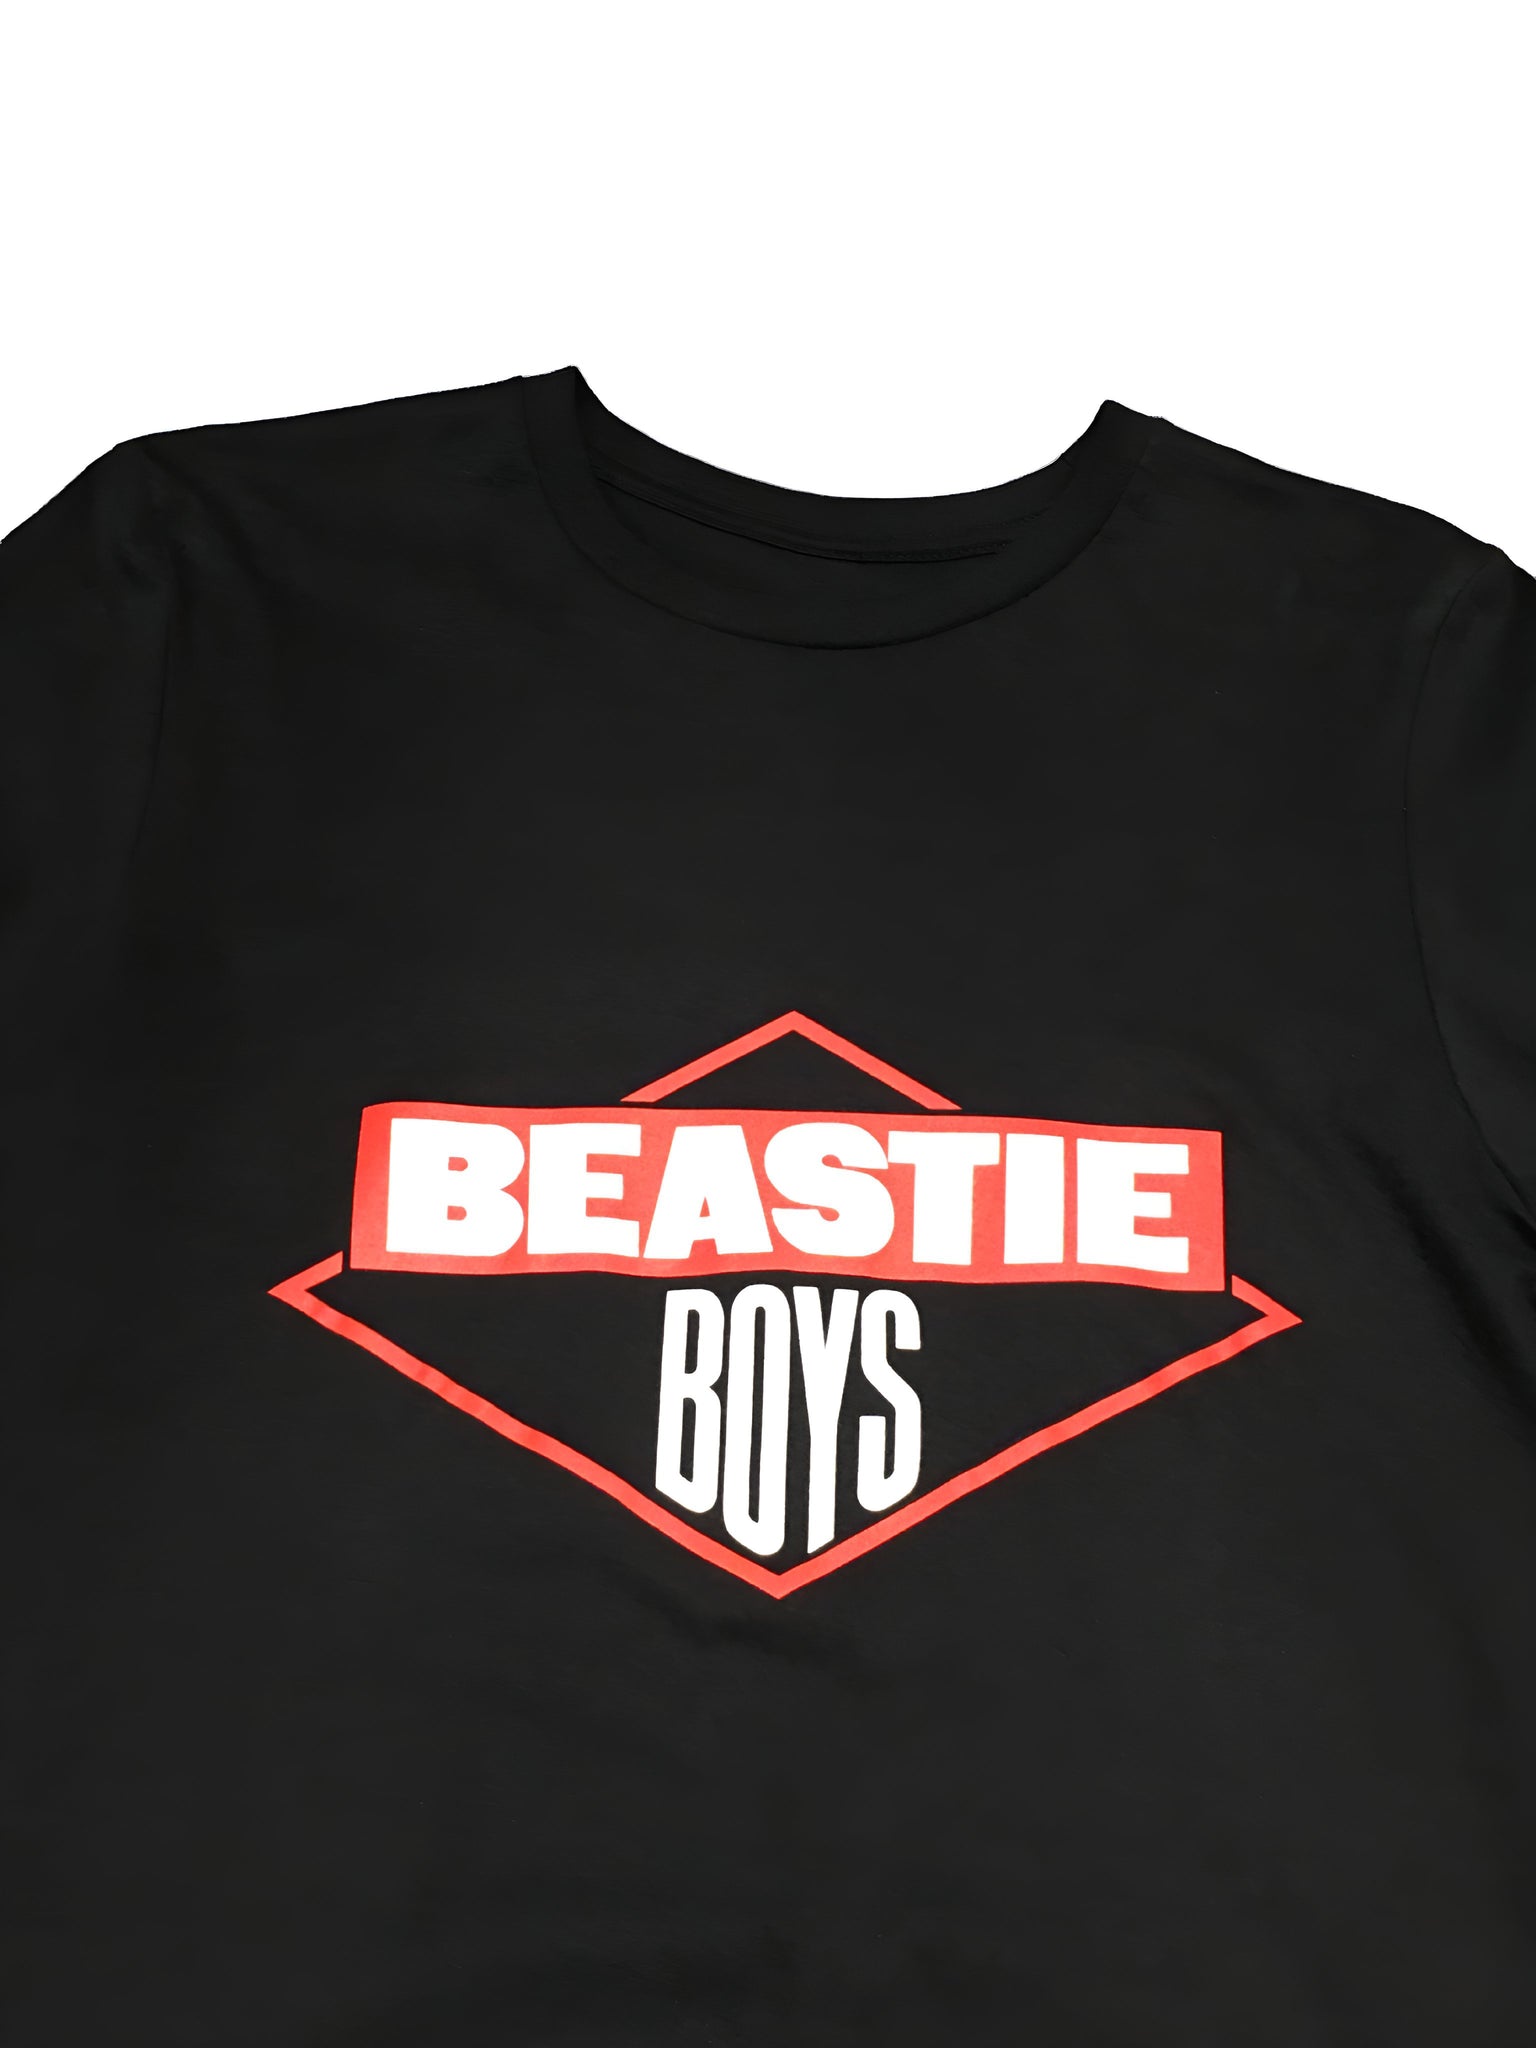 Beastie Boys Logo Print Men's Tee